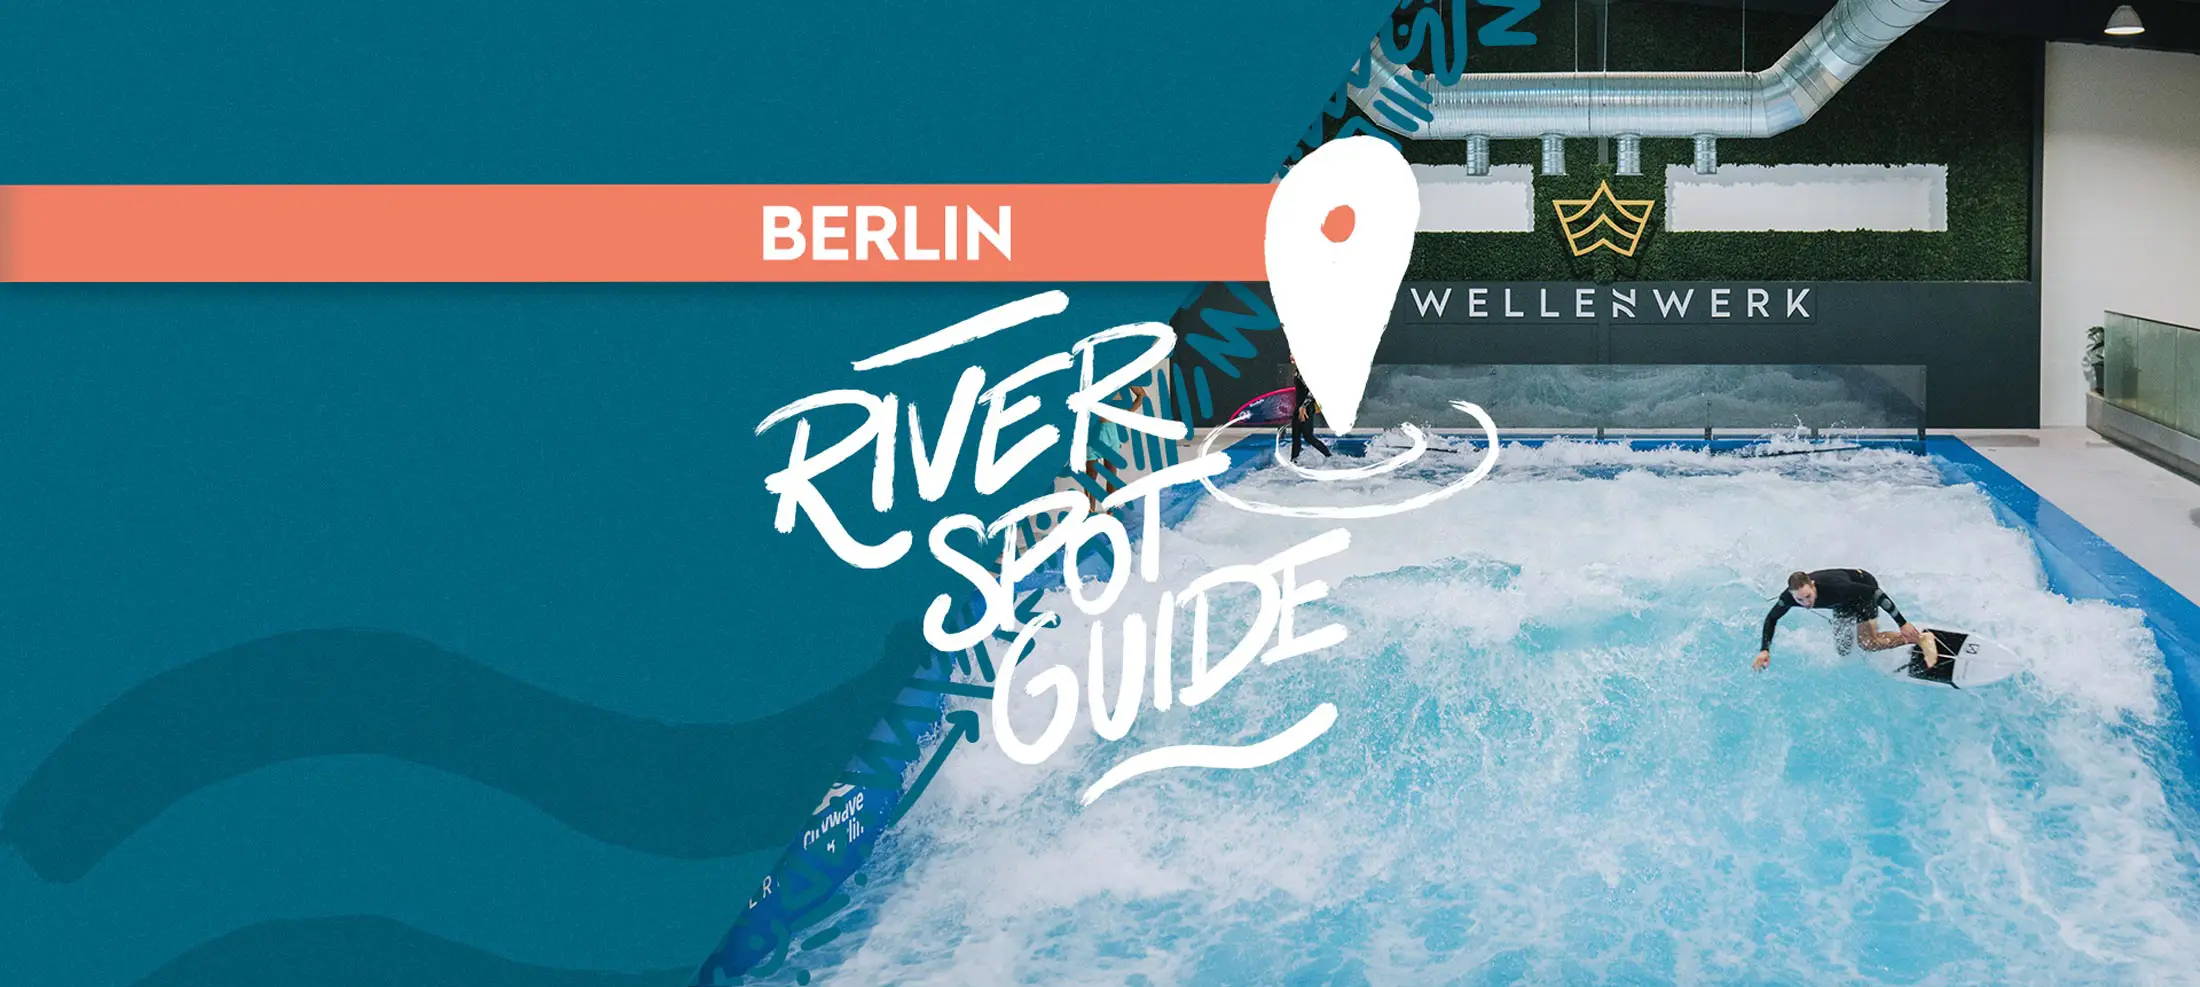 River Spot Guide Wellenwerk Berlin